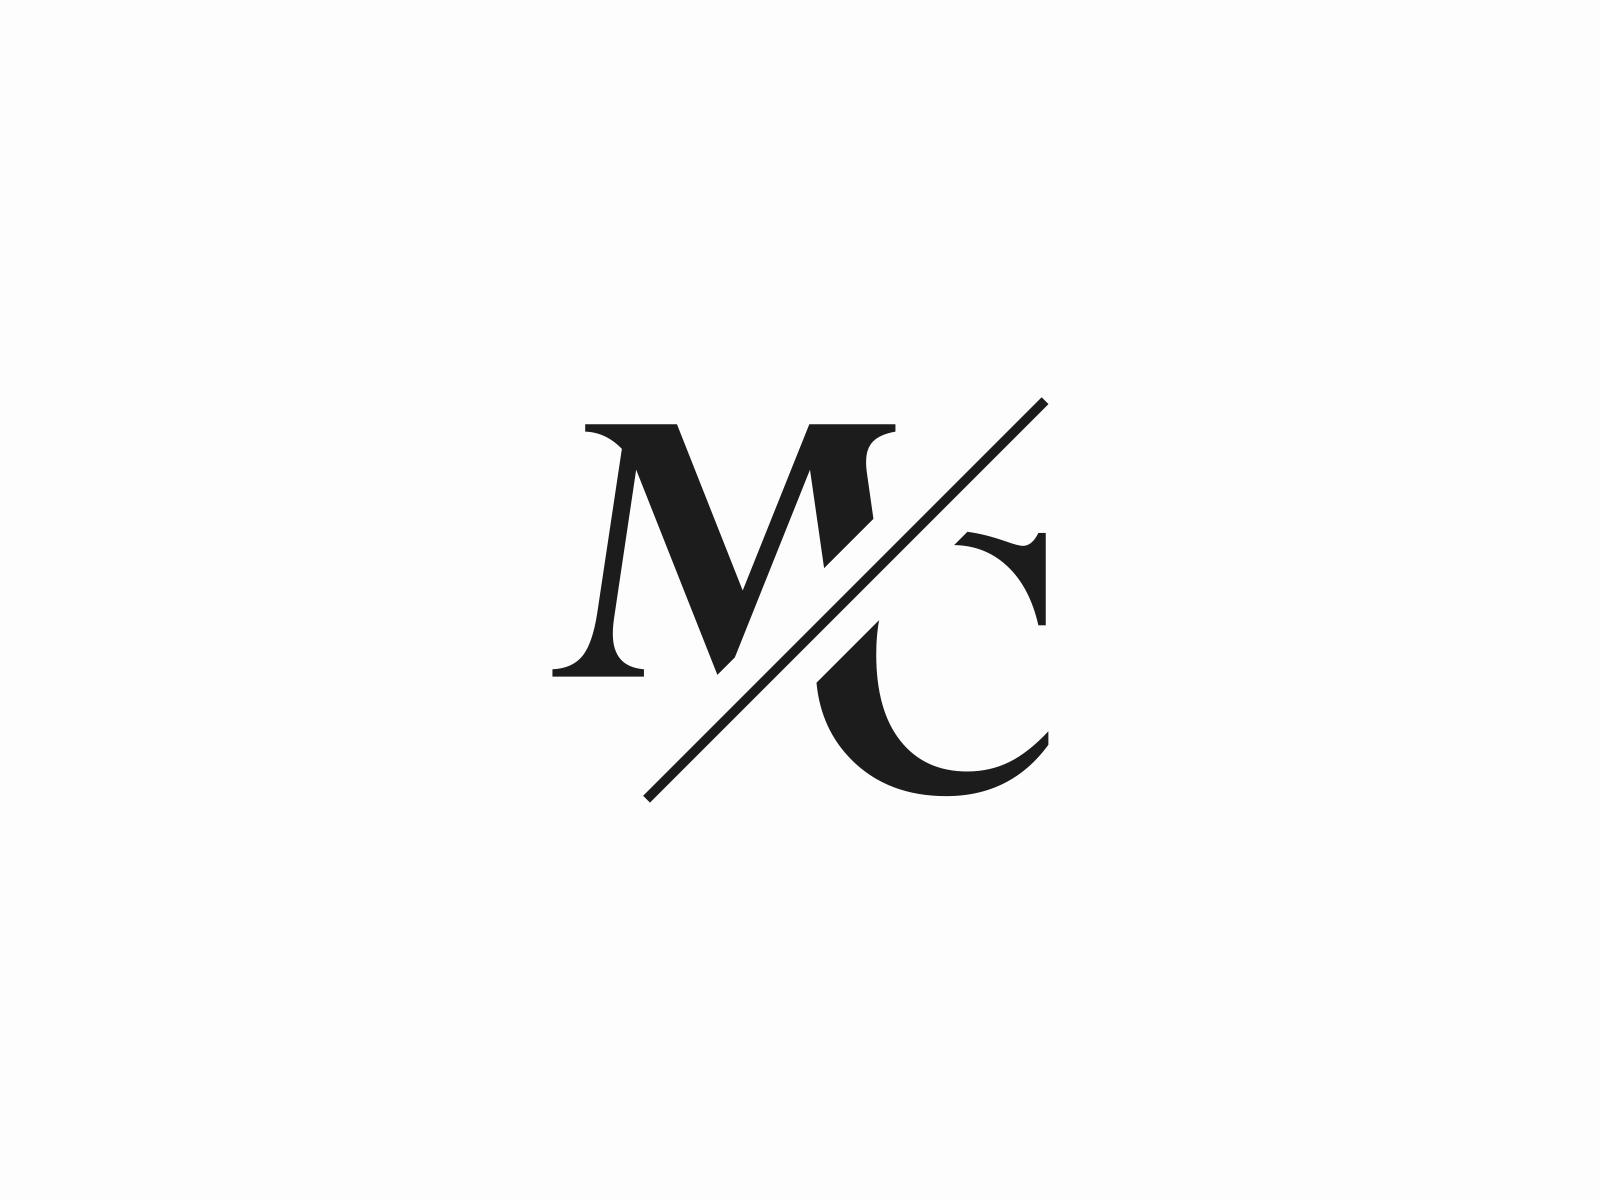 Clan MC Logo PNG Transparent & SVG Vector - Freebie Supply